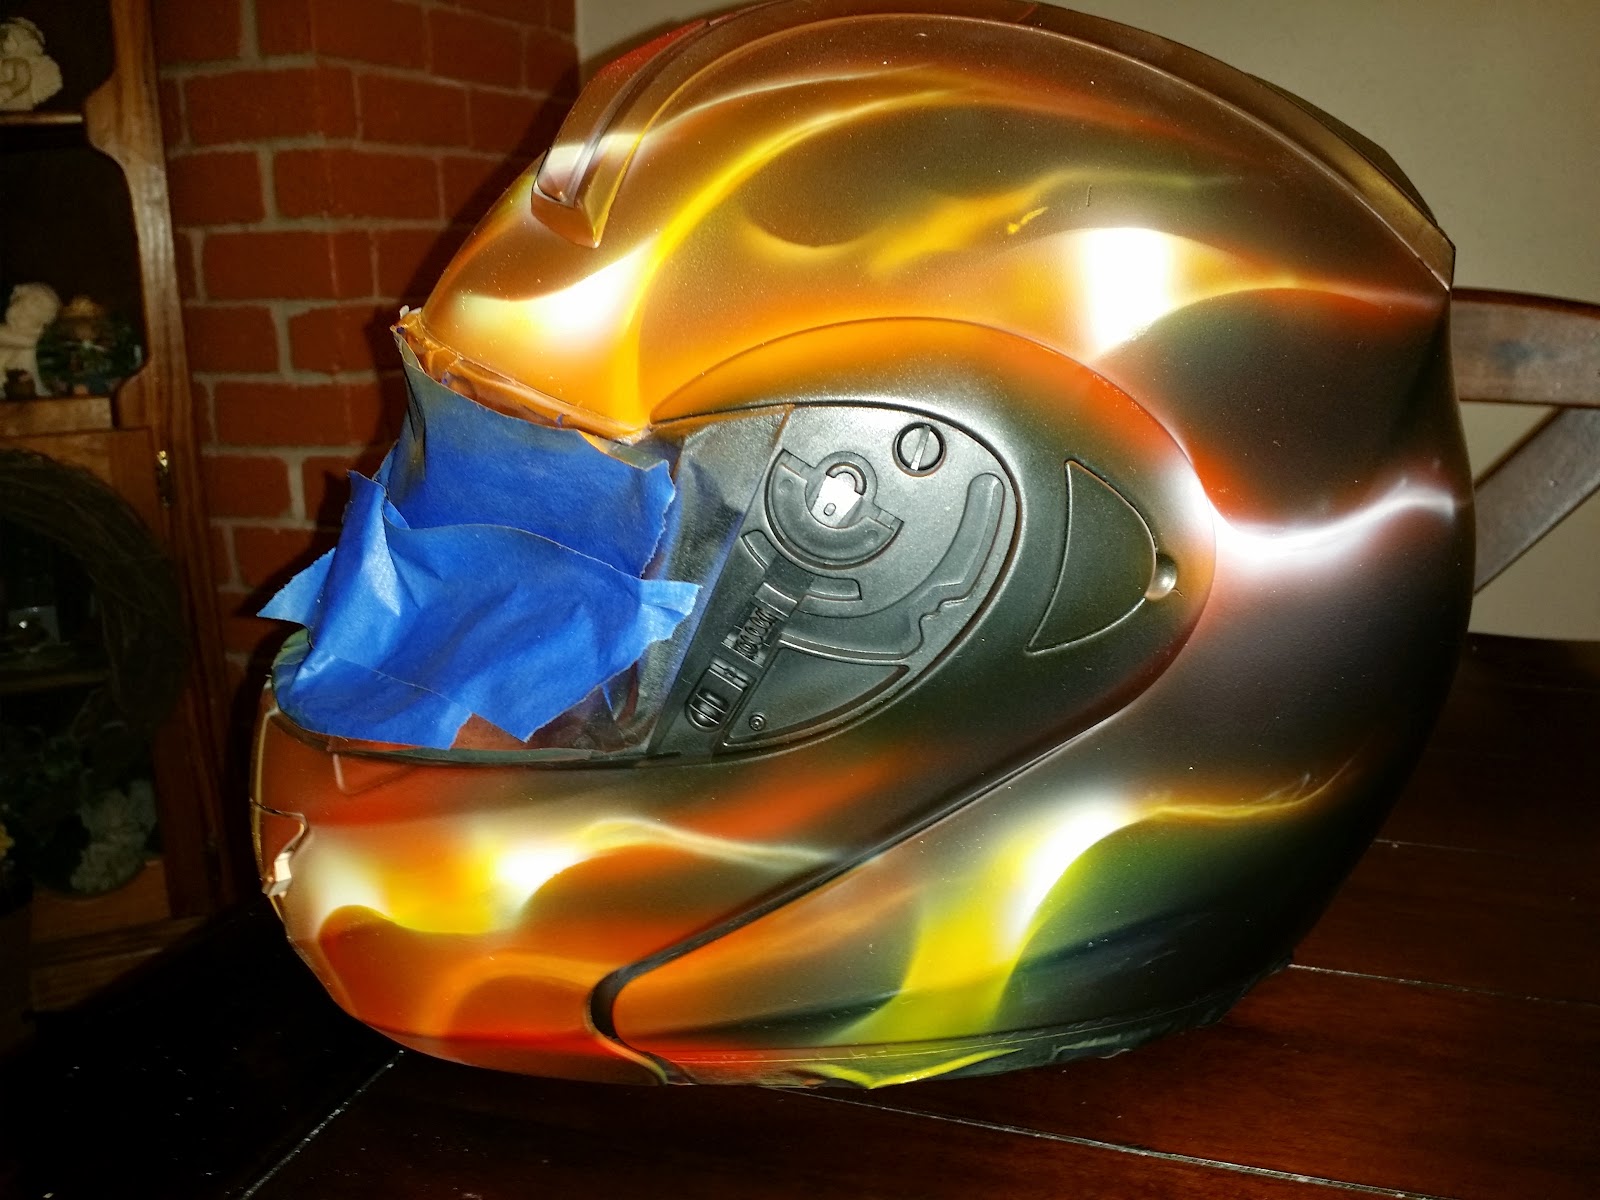 Zimmer DesignZ Custom Paint: Work in progress. Helmet for now, custom